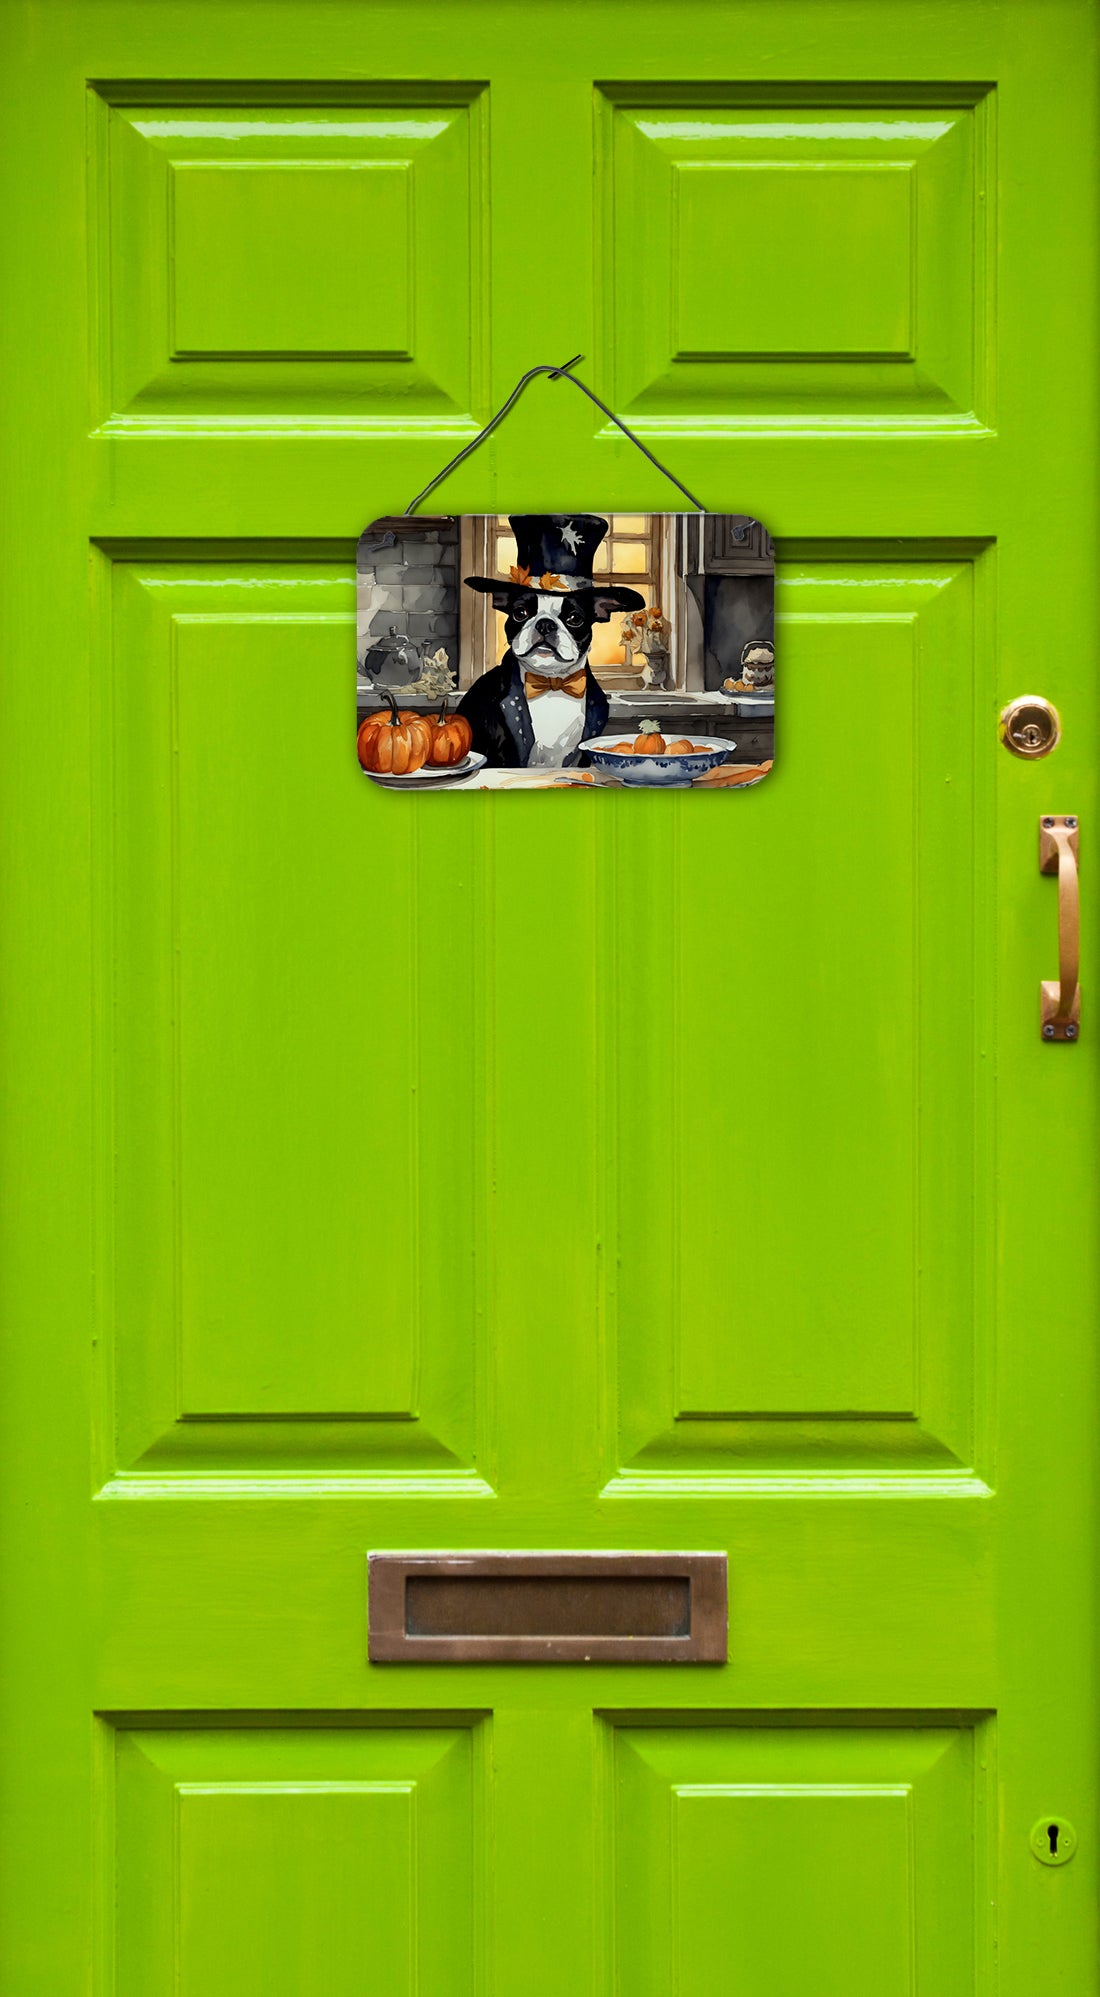 Buy this Boston Terrier Fall Kitchen Pumpkins Wall or Door Hanging Prints